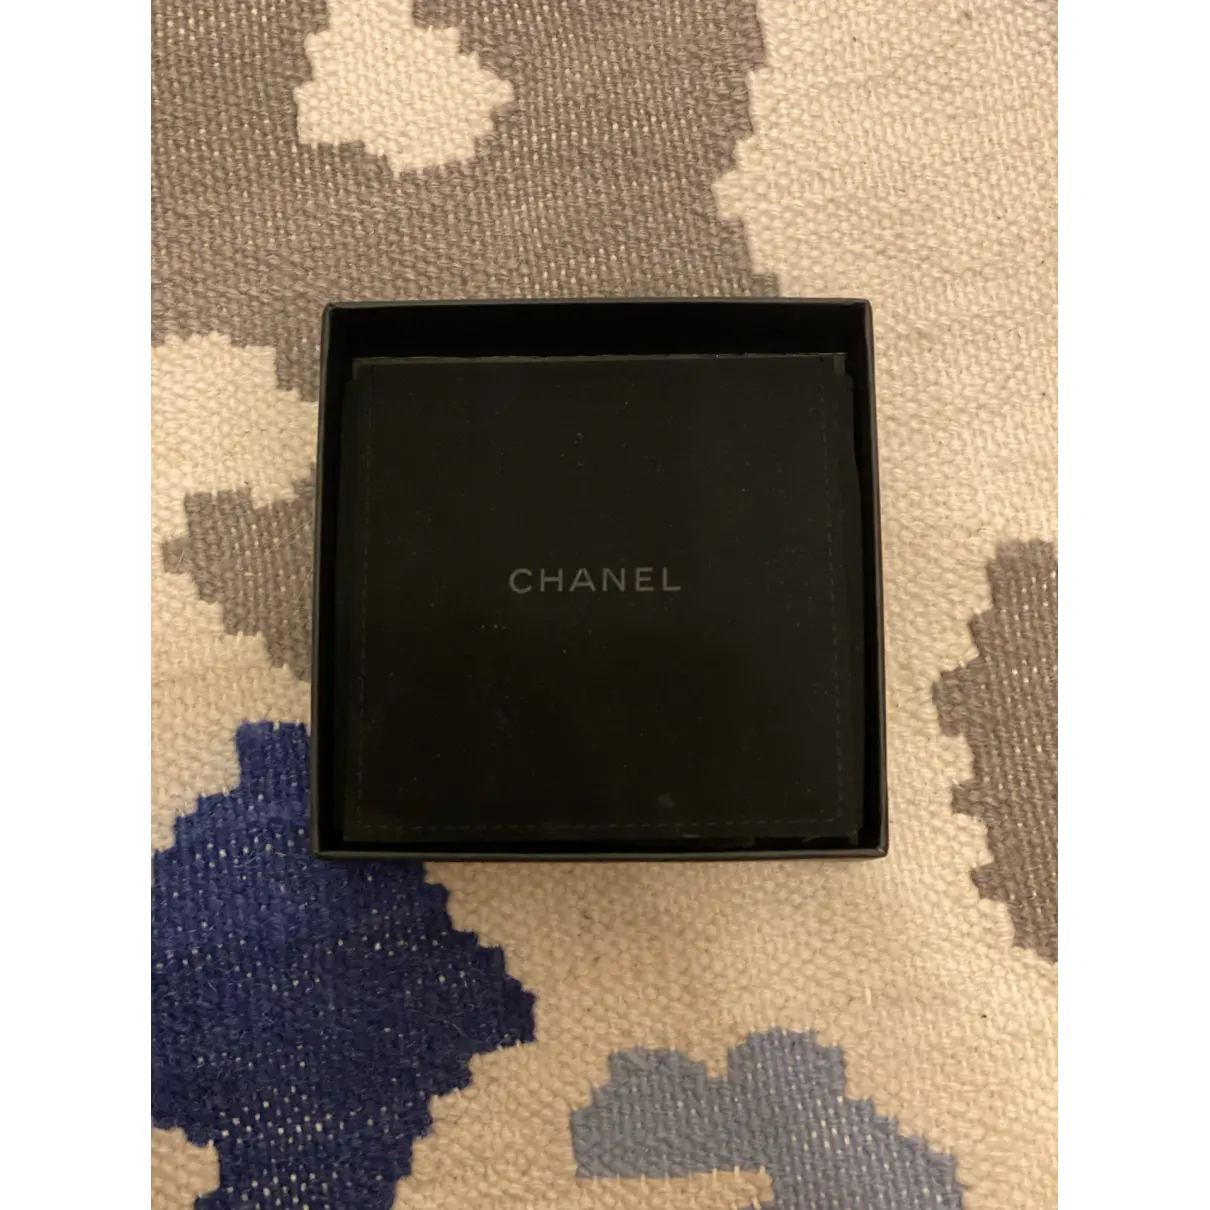 CHANEL hair accessory Chanel